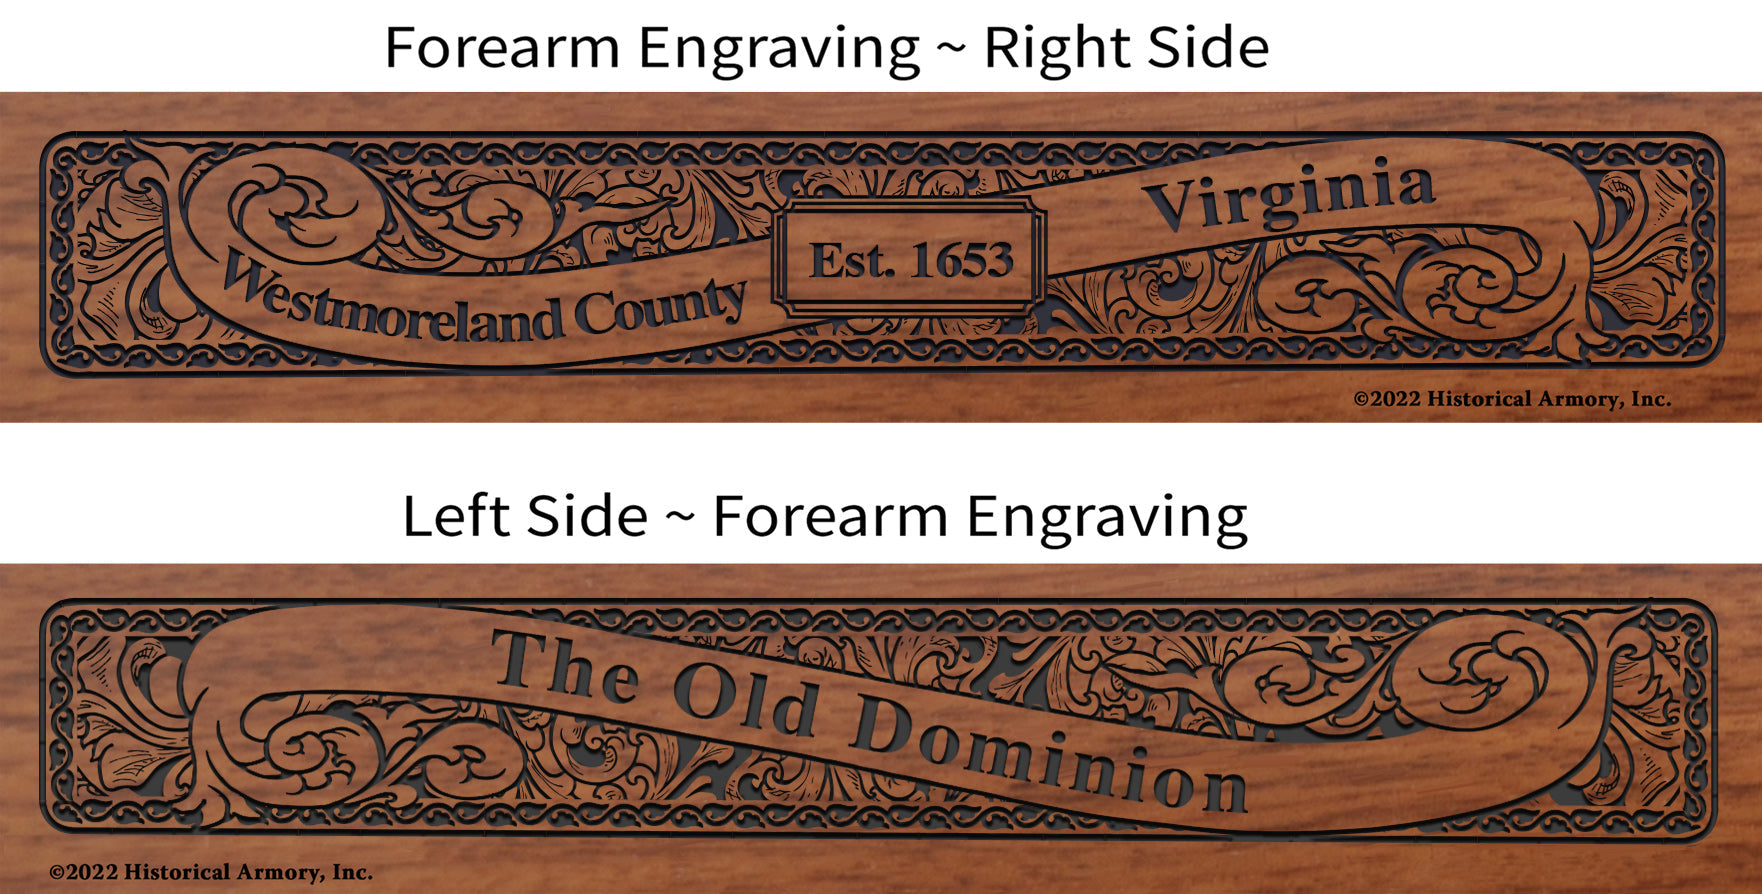 Westmoreland County Virginia Engraved Rifle Forearm